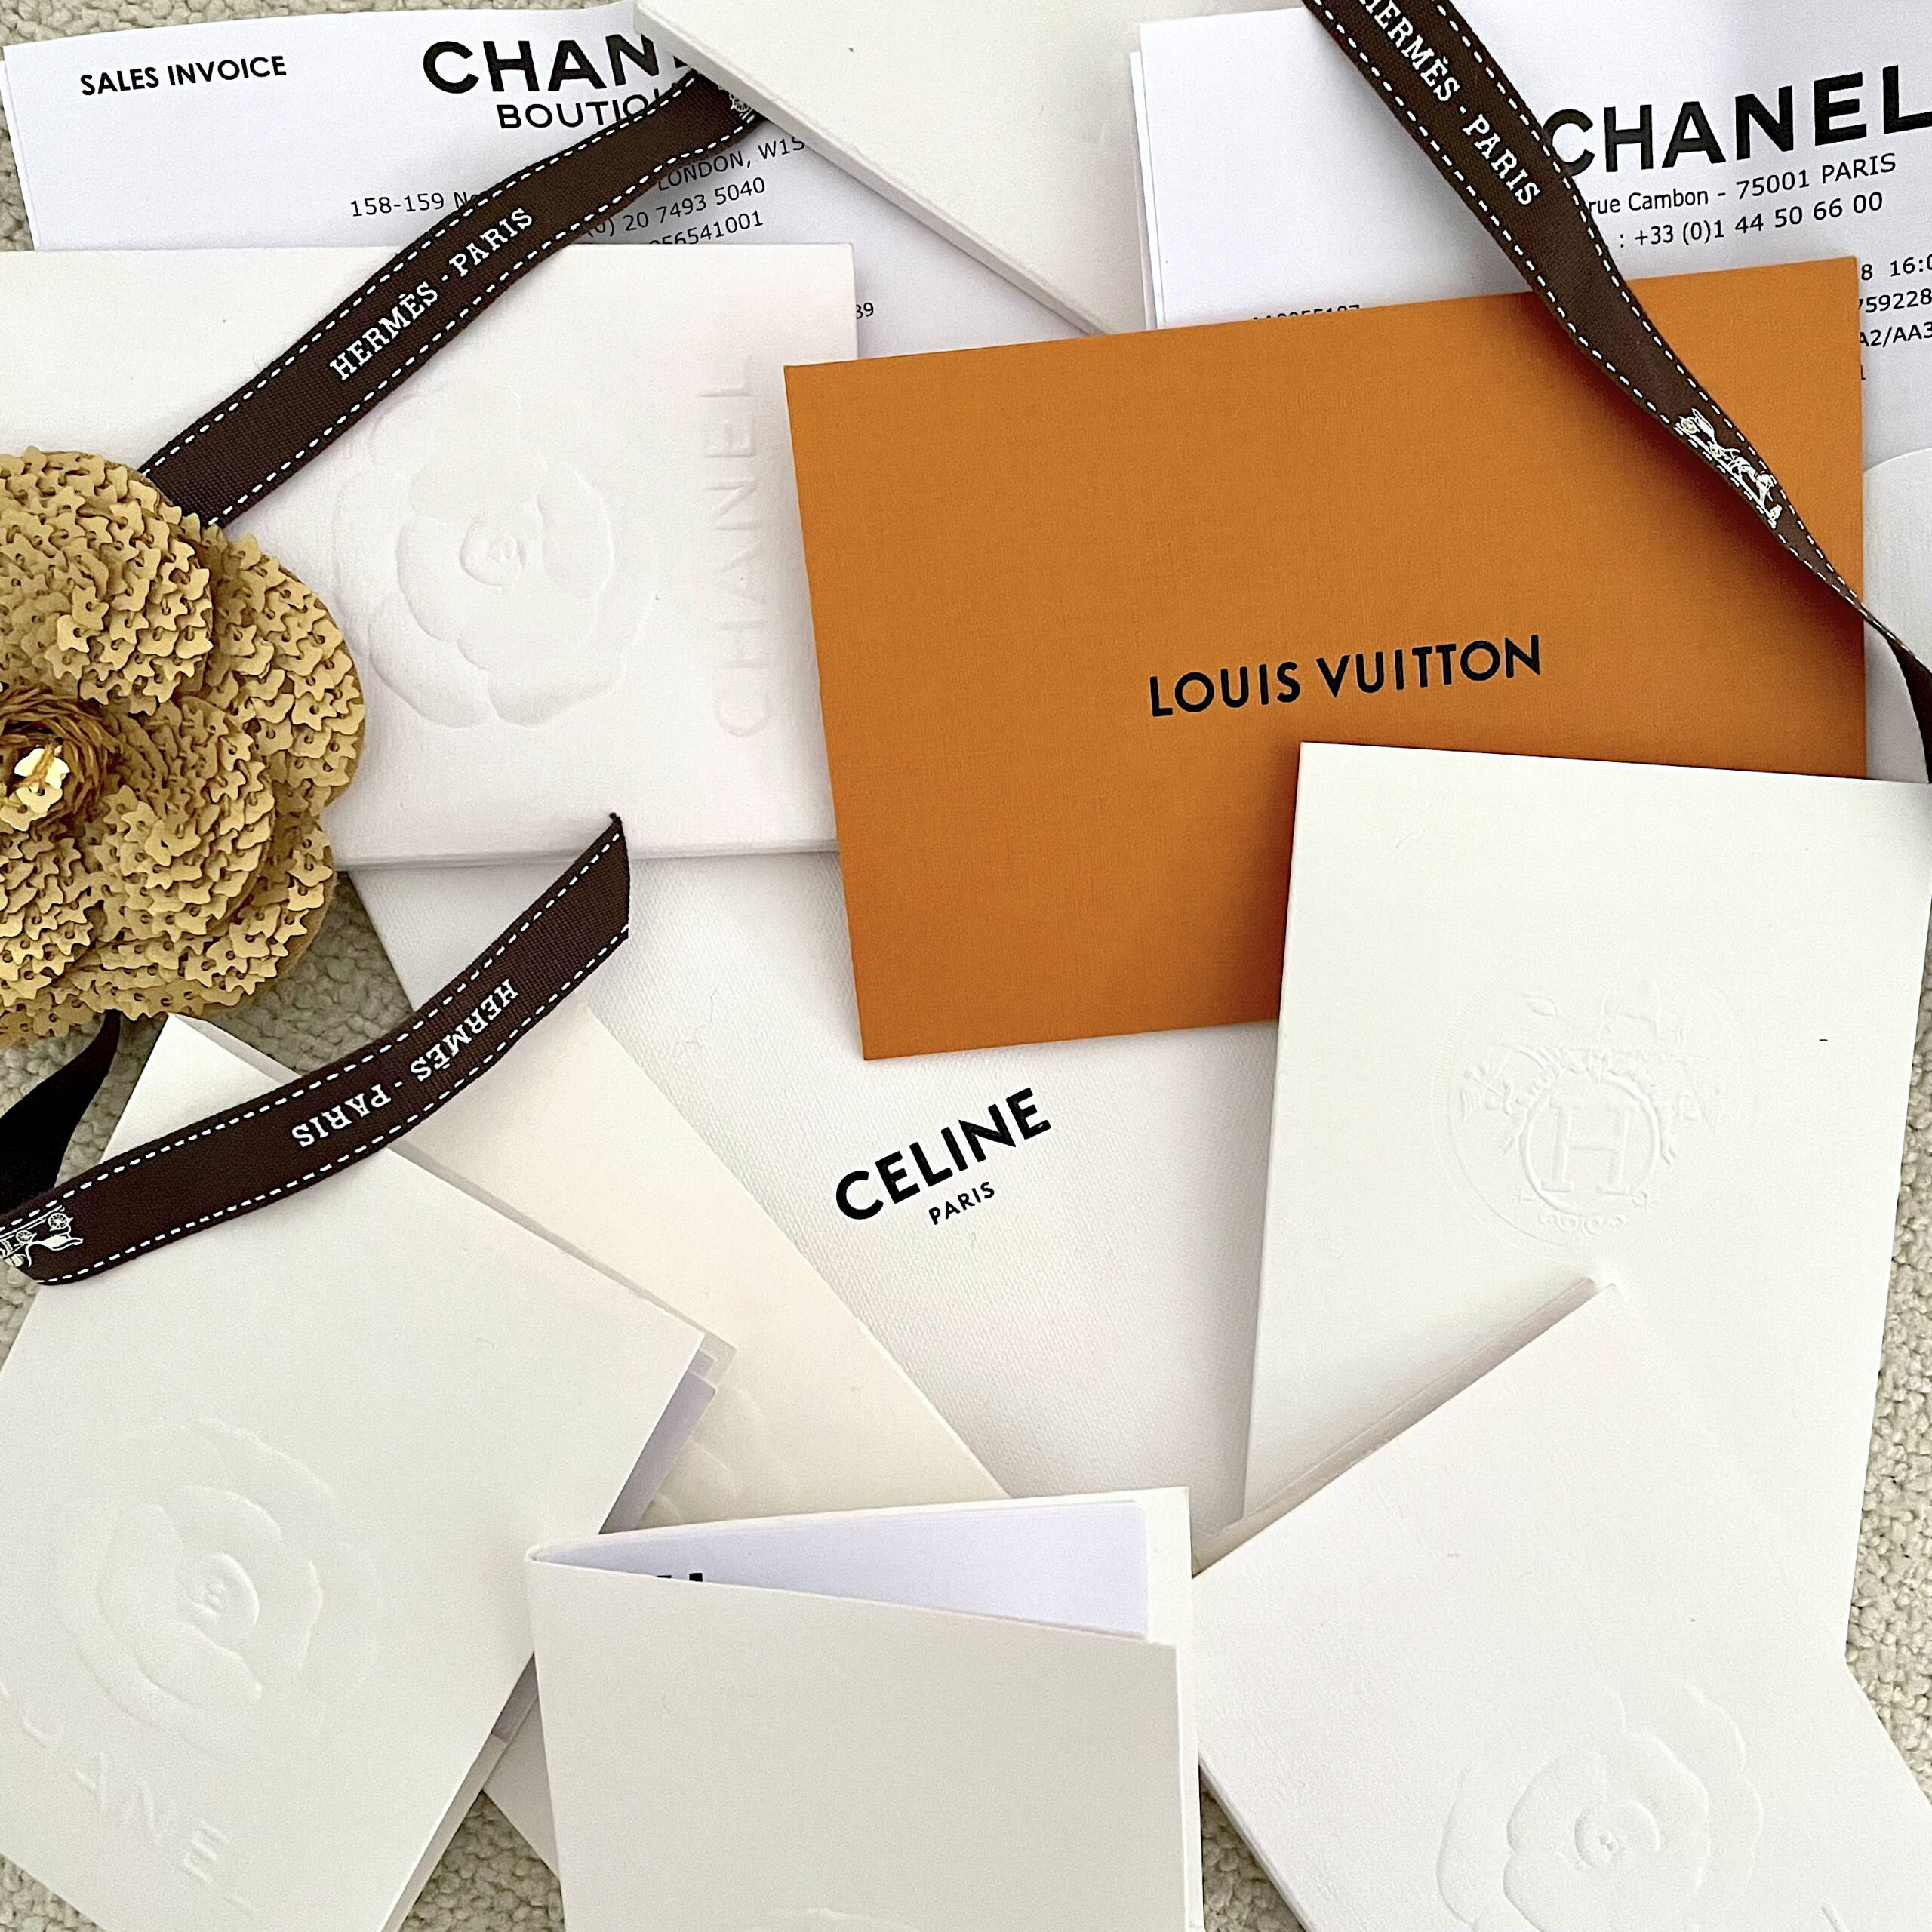 LOUIS VUITTON Orange Gift Bag/Tote & Gift Receipt Envelope